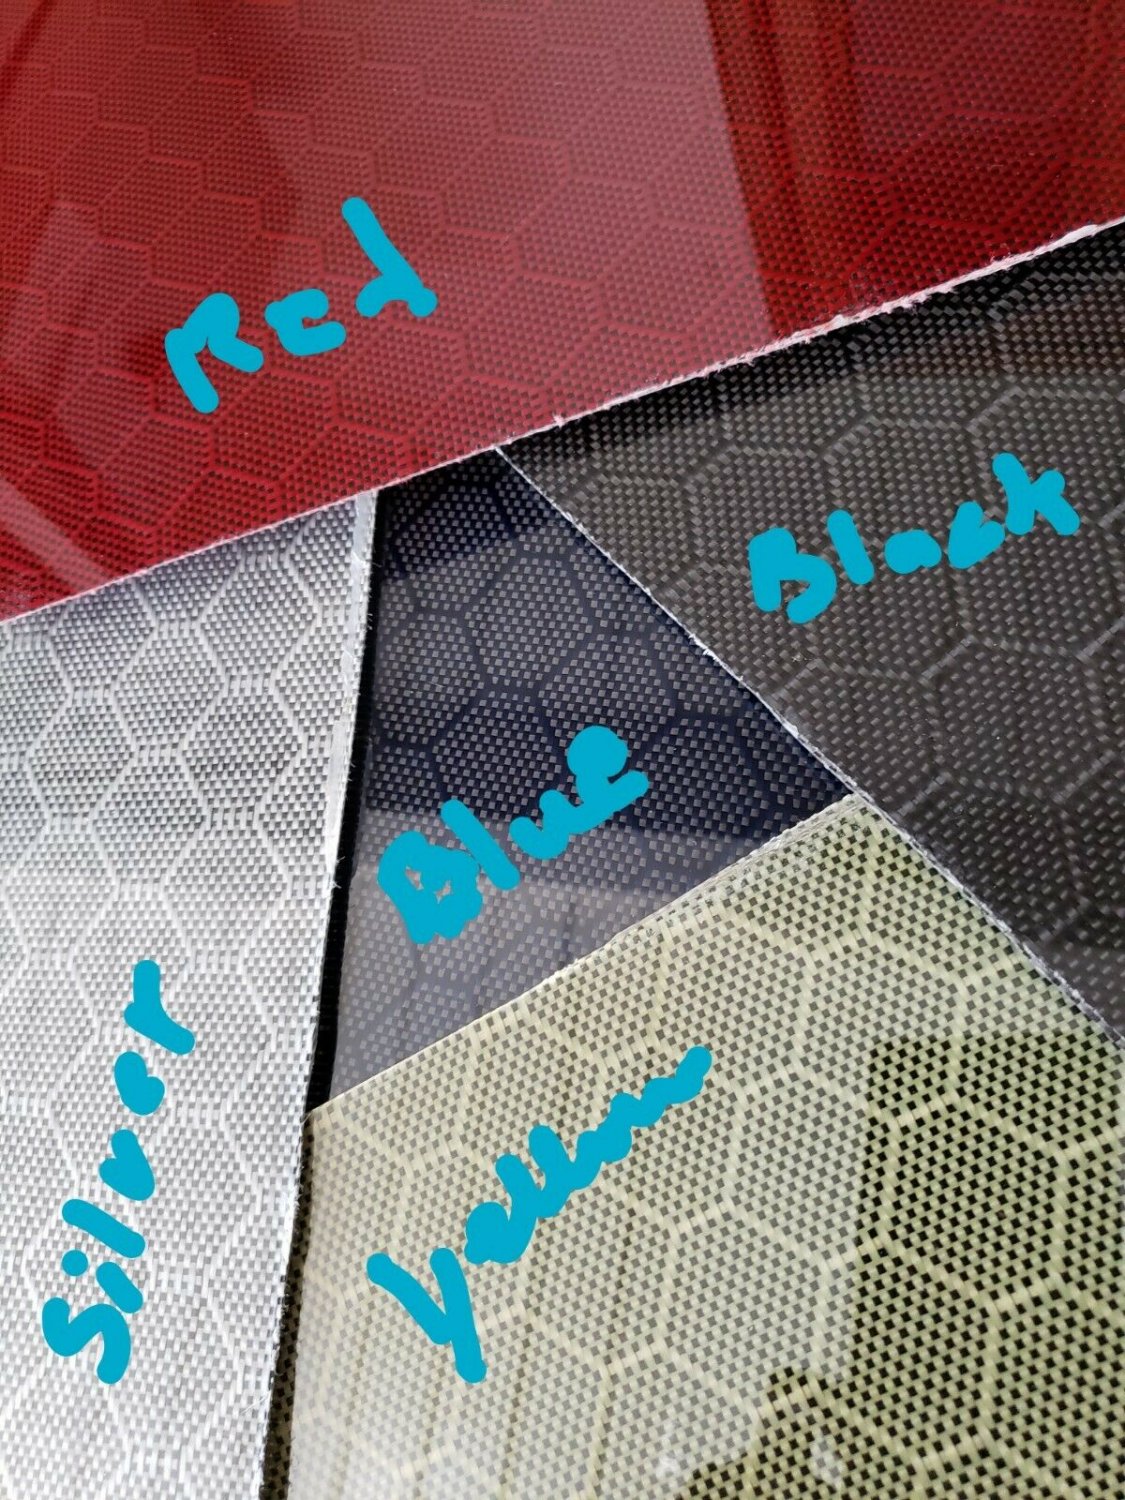 12"x24"x1/32" Honeycomb Carbon Fiber Fiberglass Sheet Panel Glossy One Side